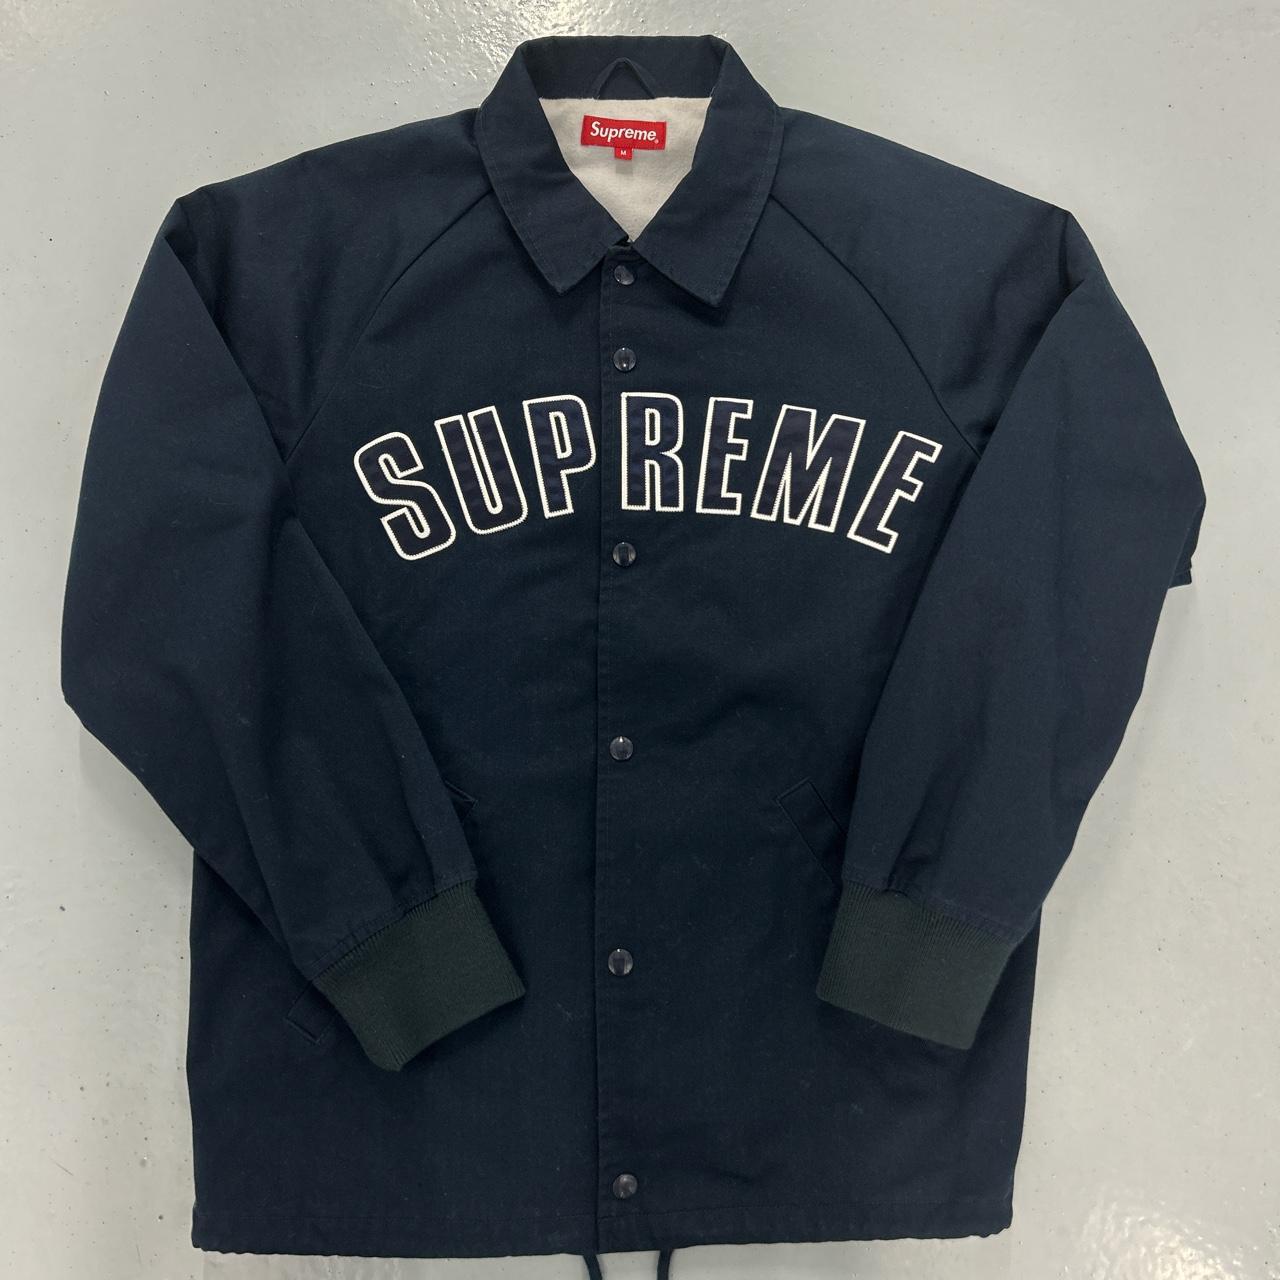 Vintage supreme navy blue heavy duty coach jacket 🧥... - Depop